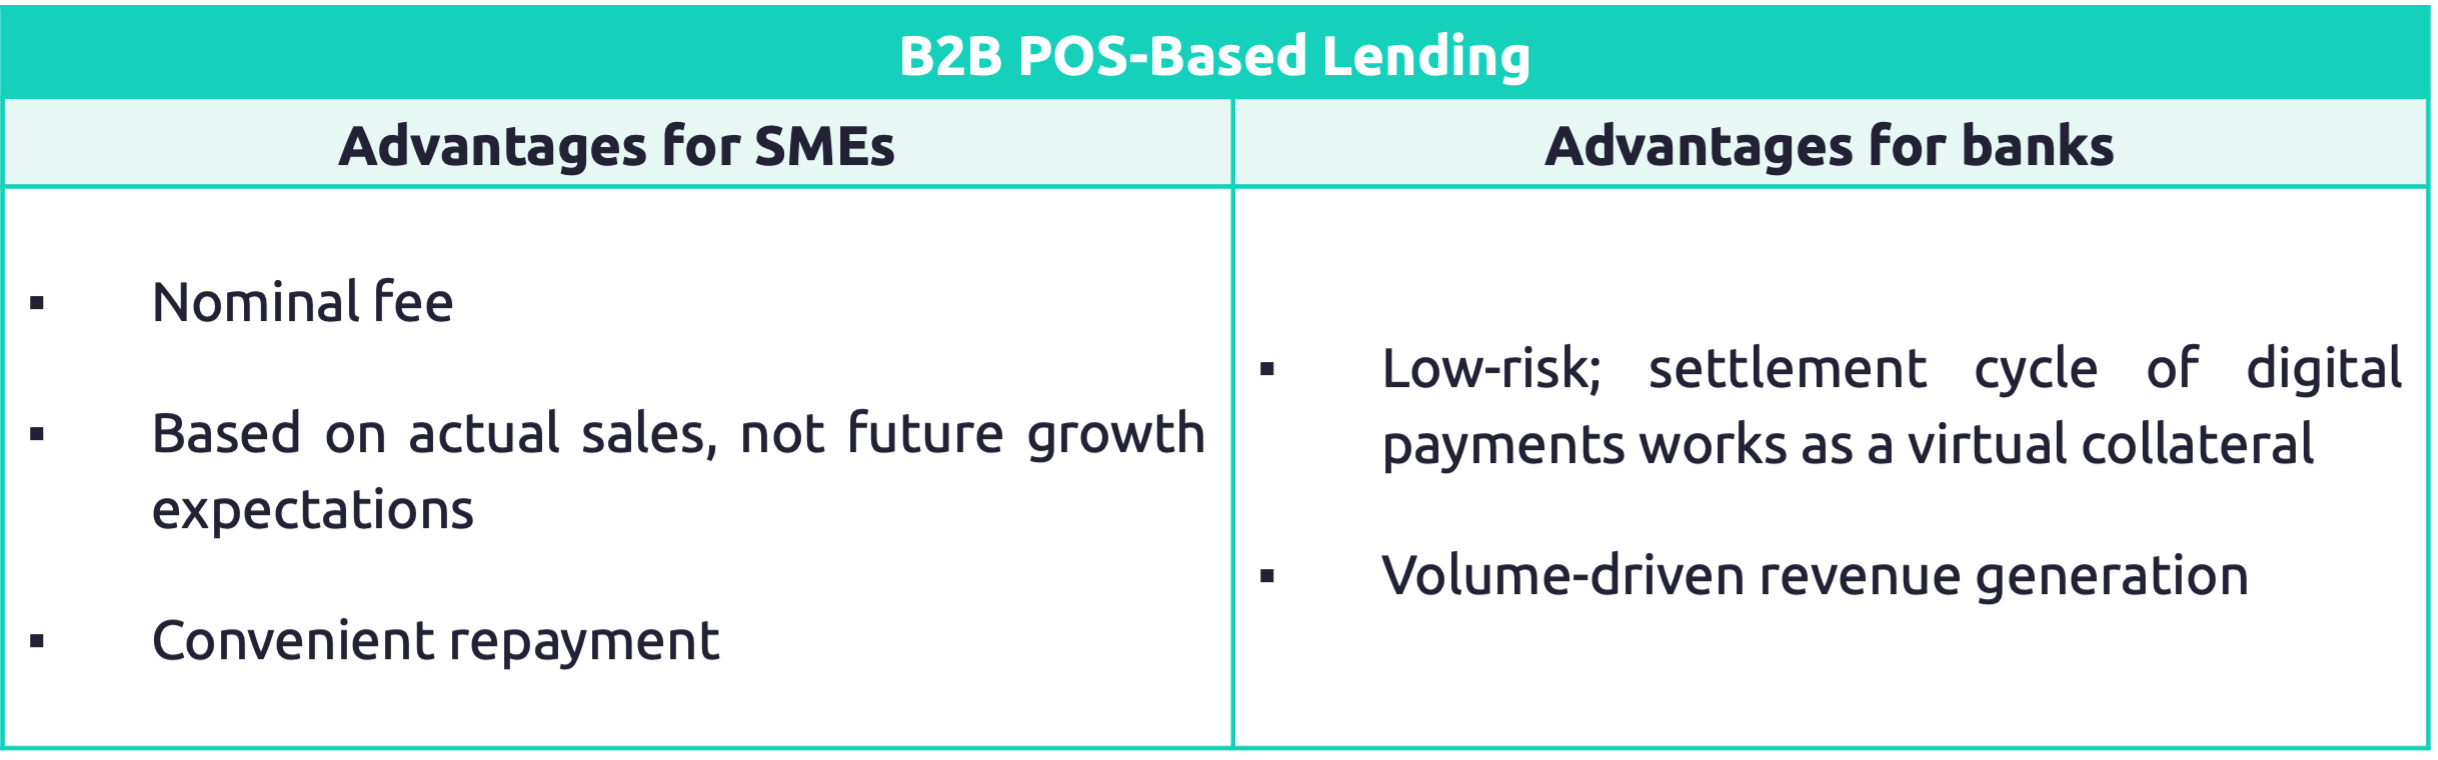 Benefits Of B2B Pos-Based Lending